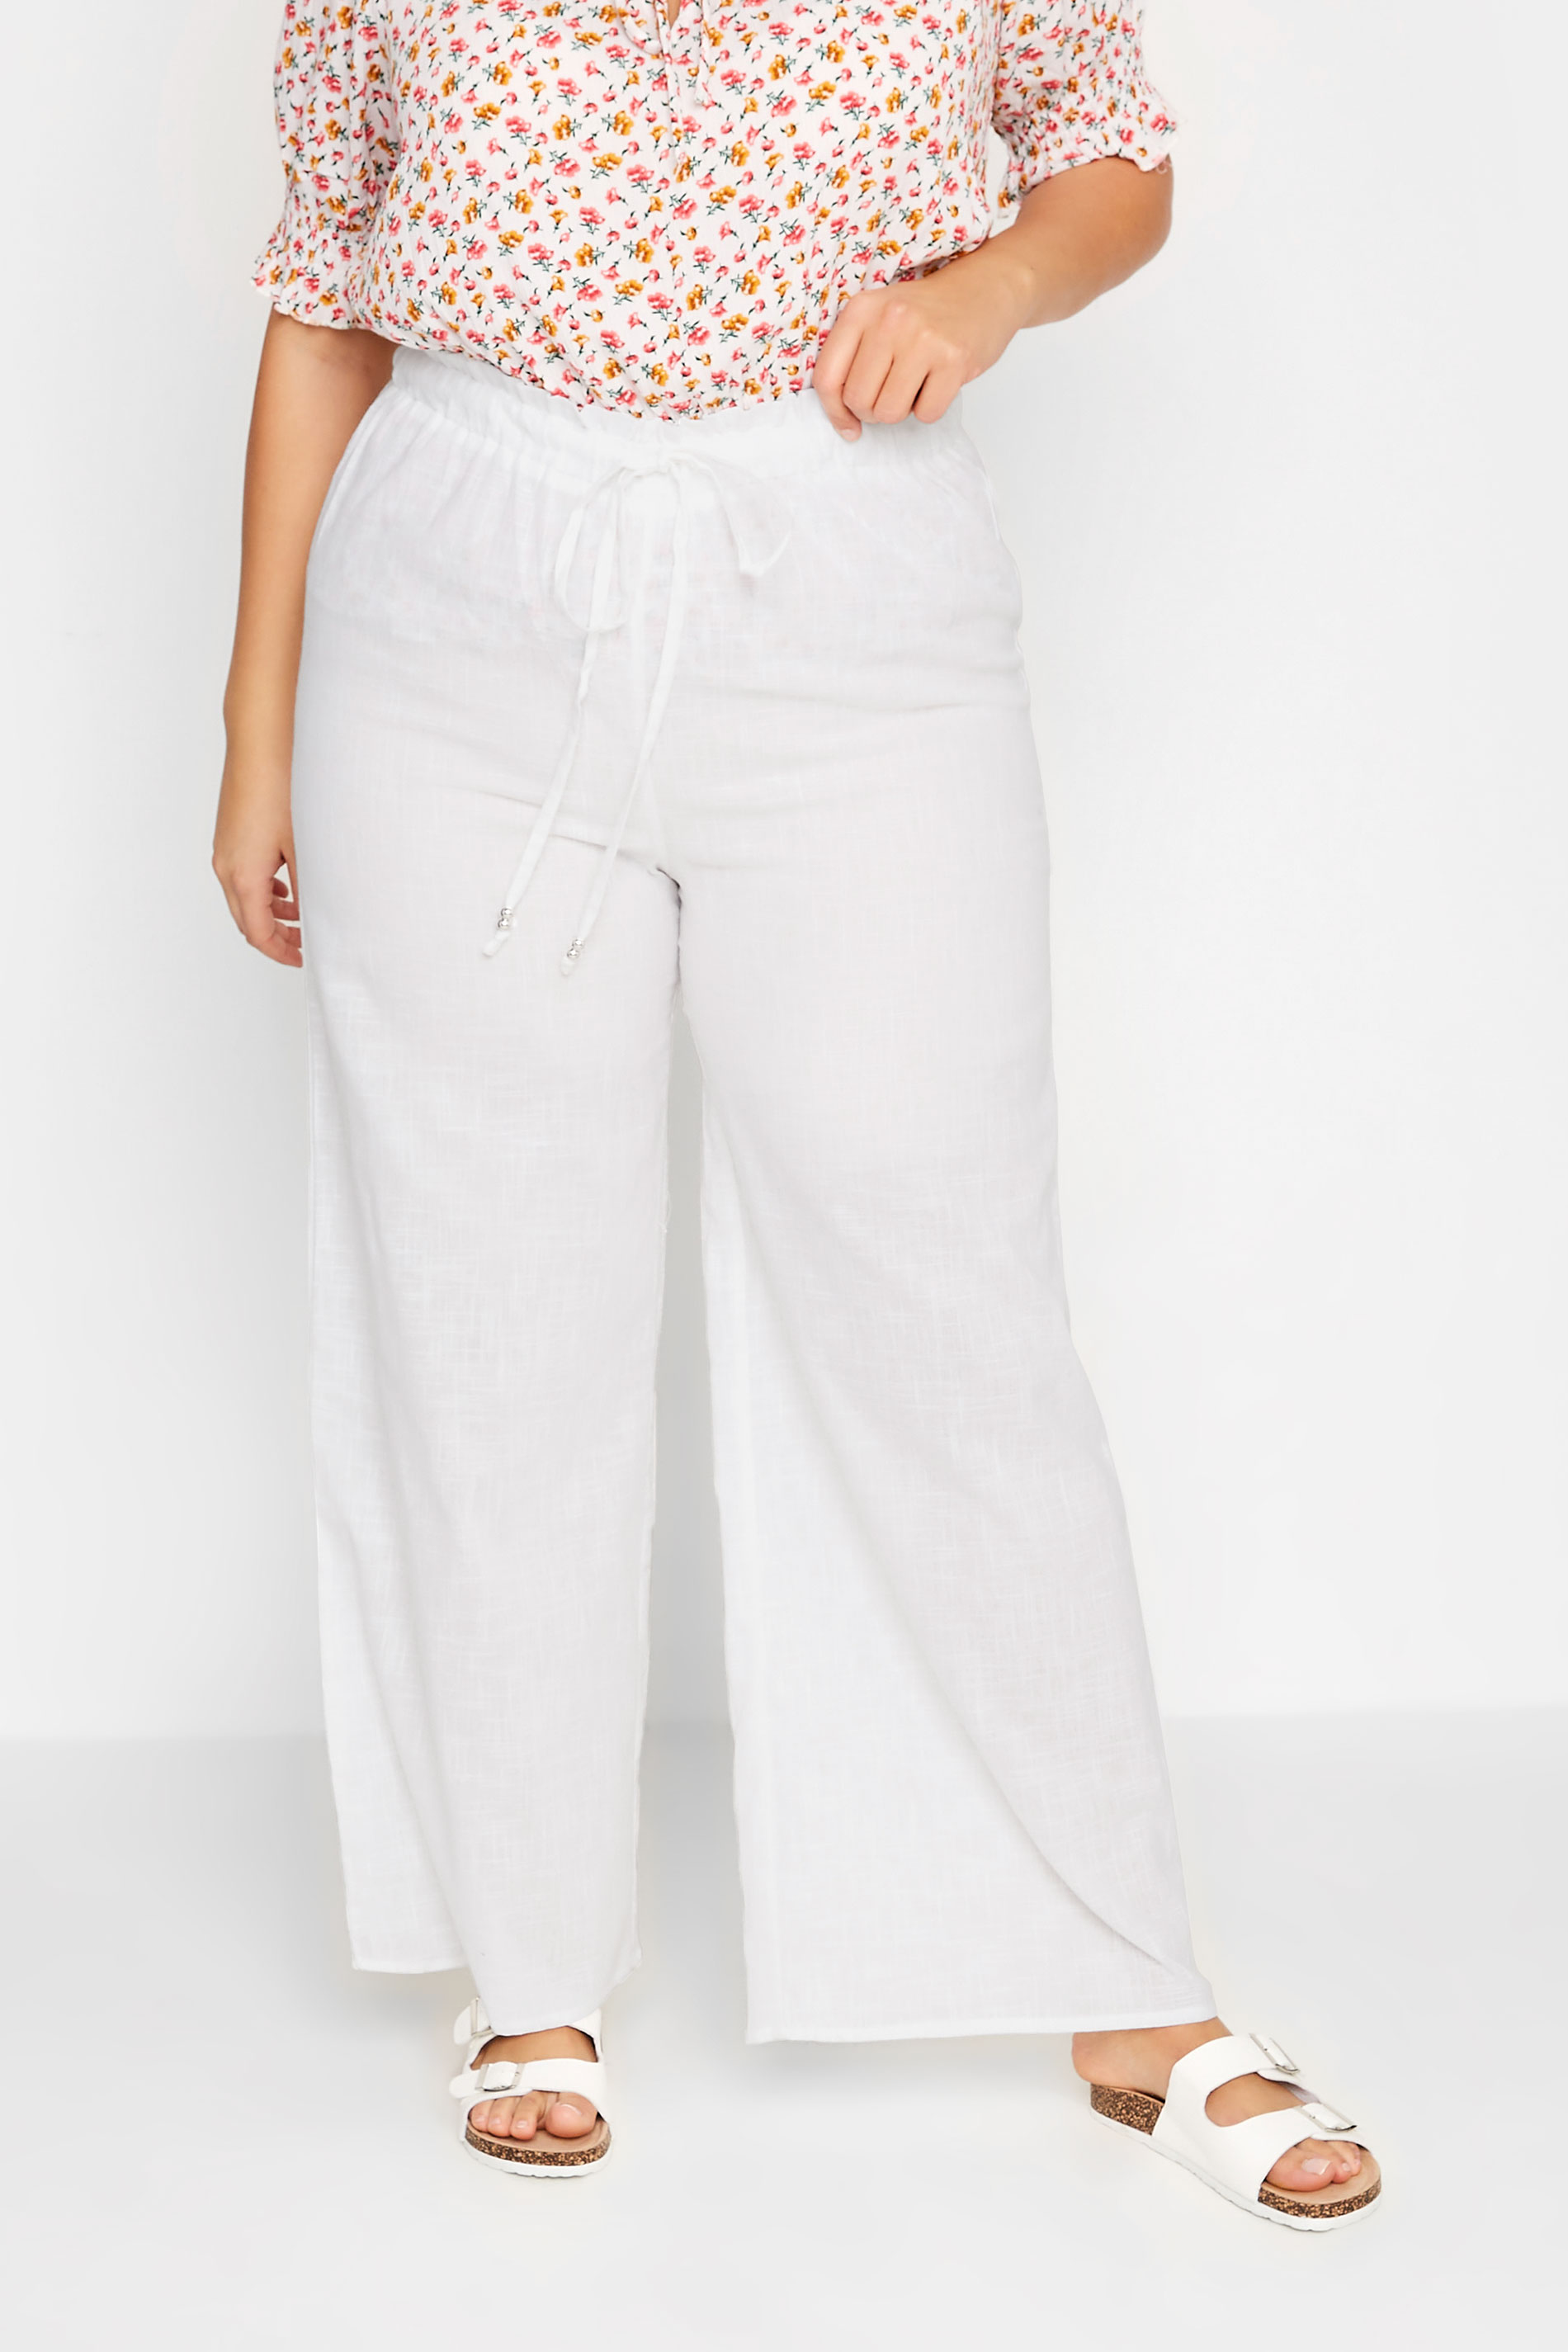 LTS Tall Women's White Cotton Wide Leg Beach Trousers | Long Tall Sally  1